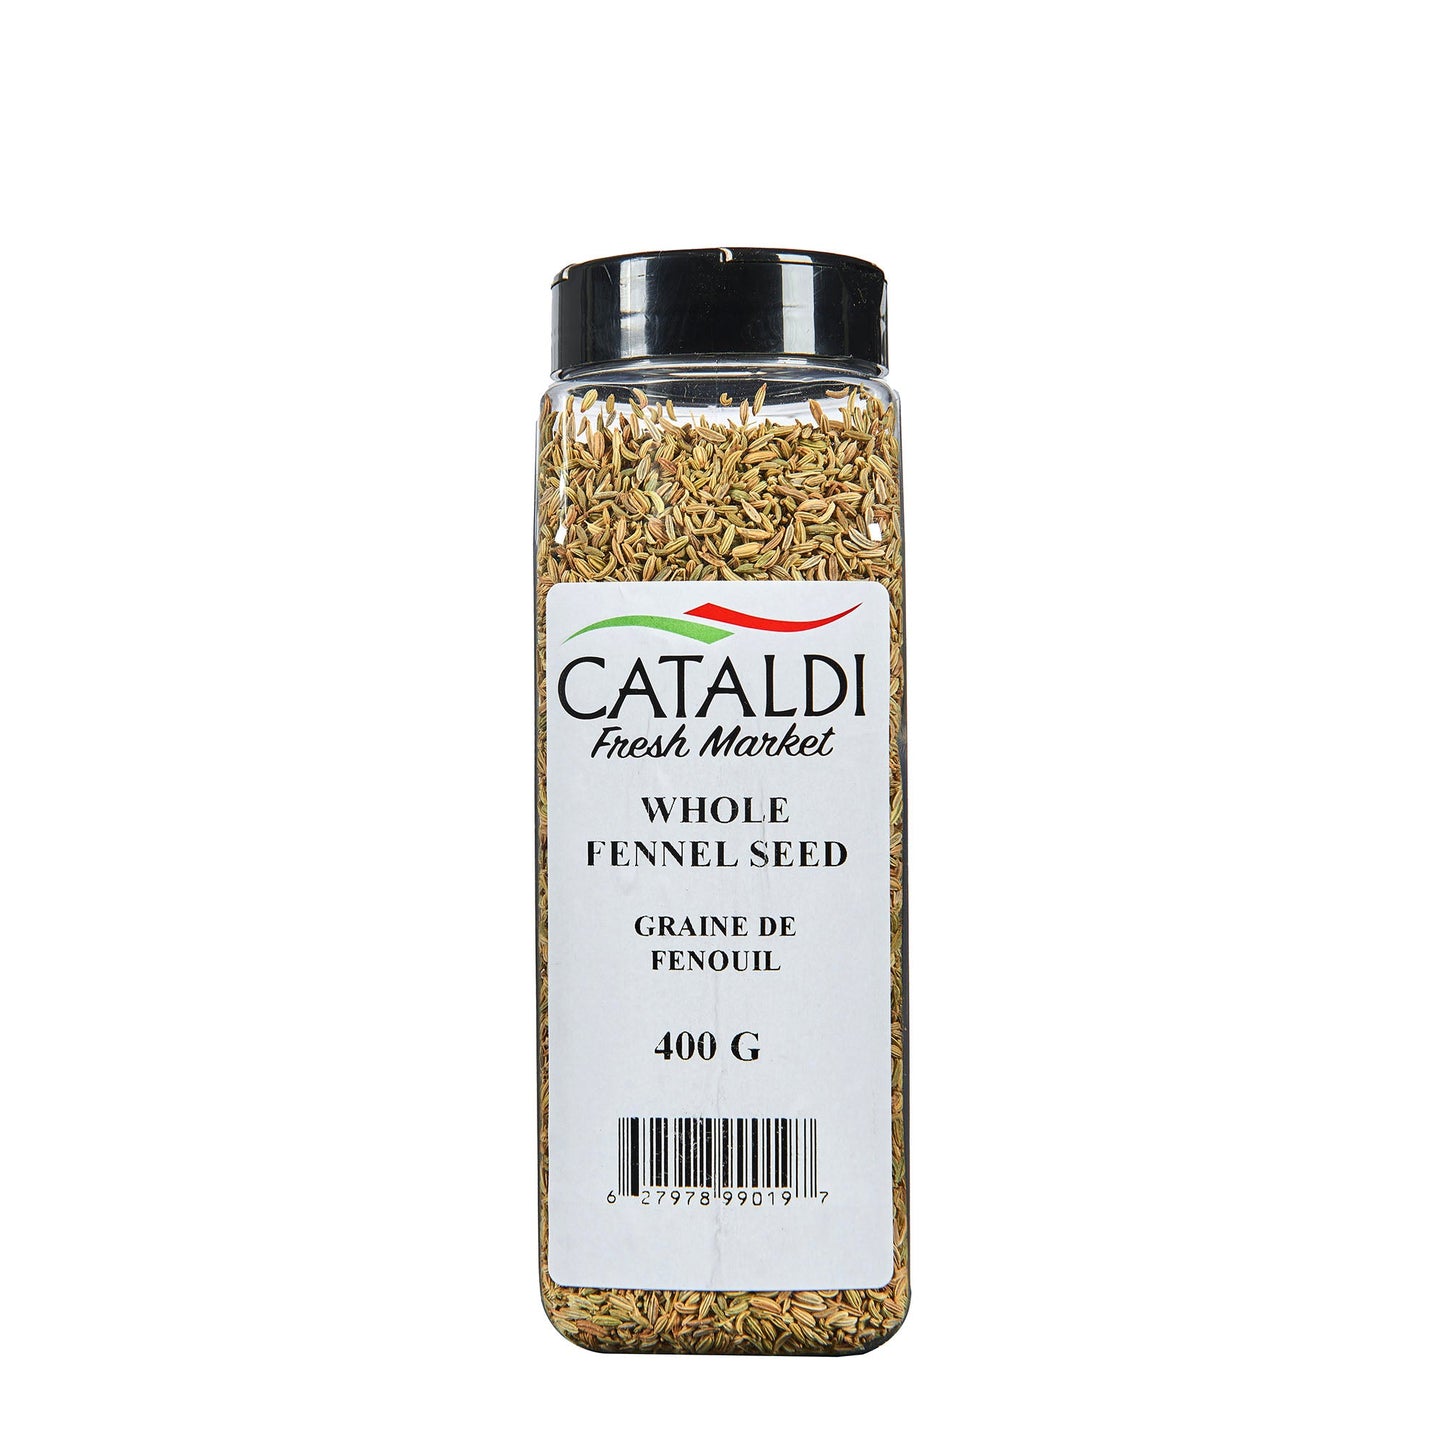 Cataldi Whole Fennel Seed 400G